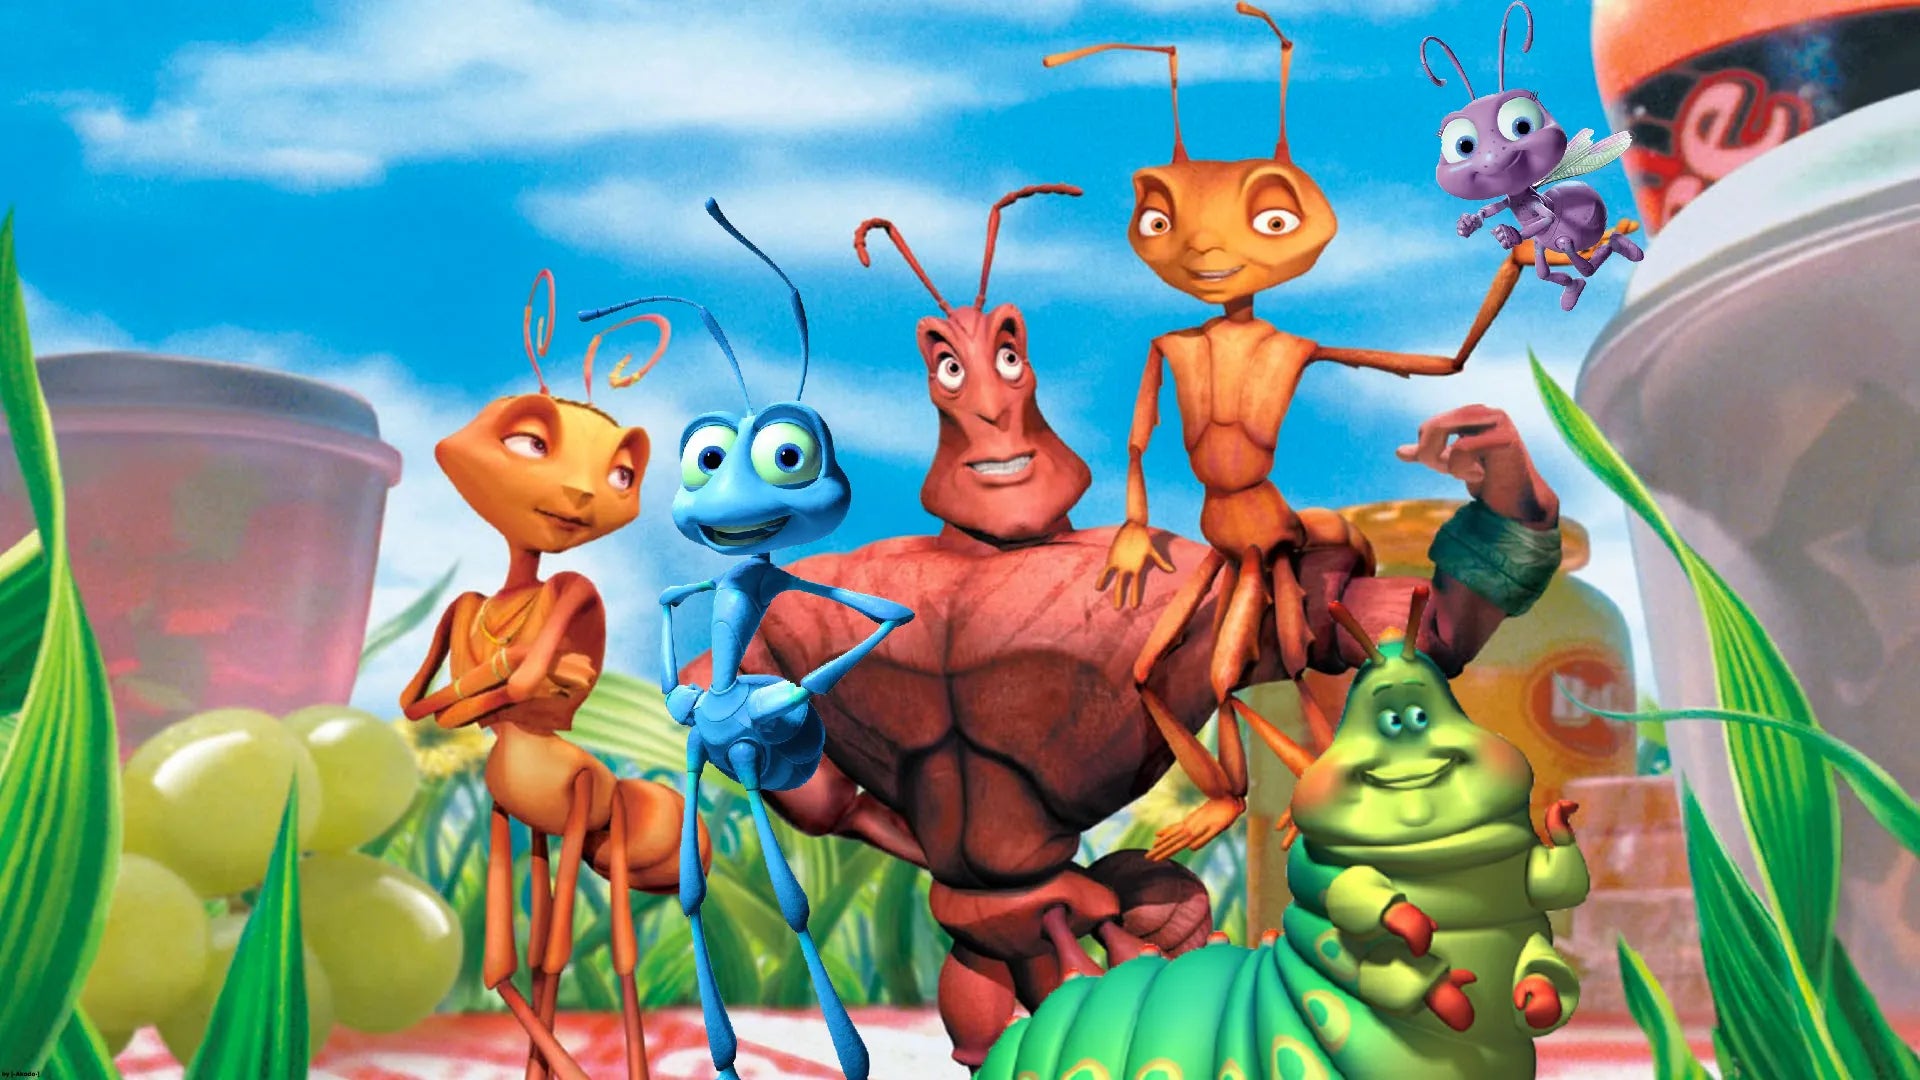 Disney Pixar's A Bug's Life - Limited Edition SteelBook